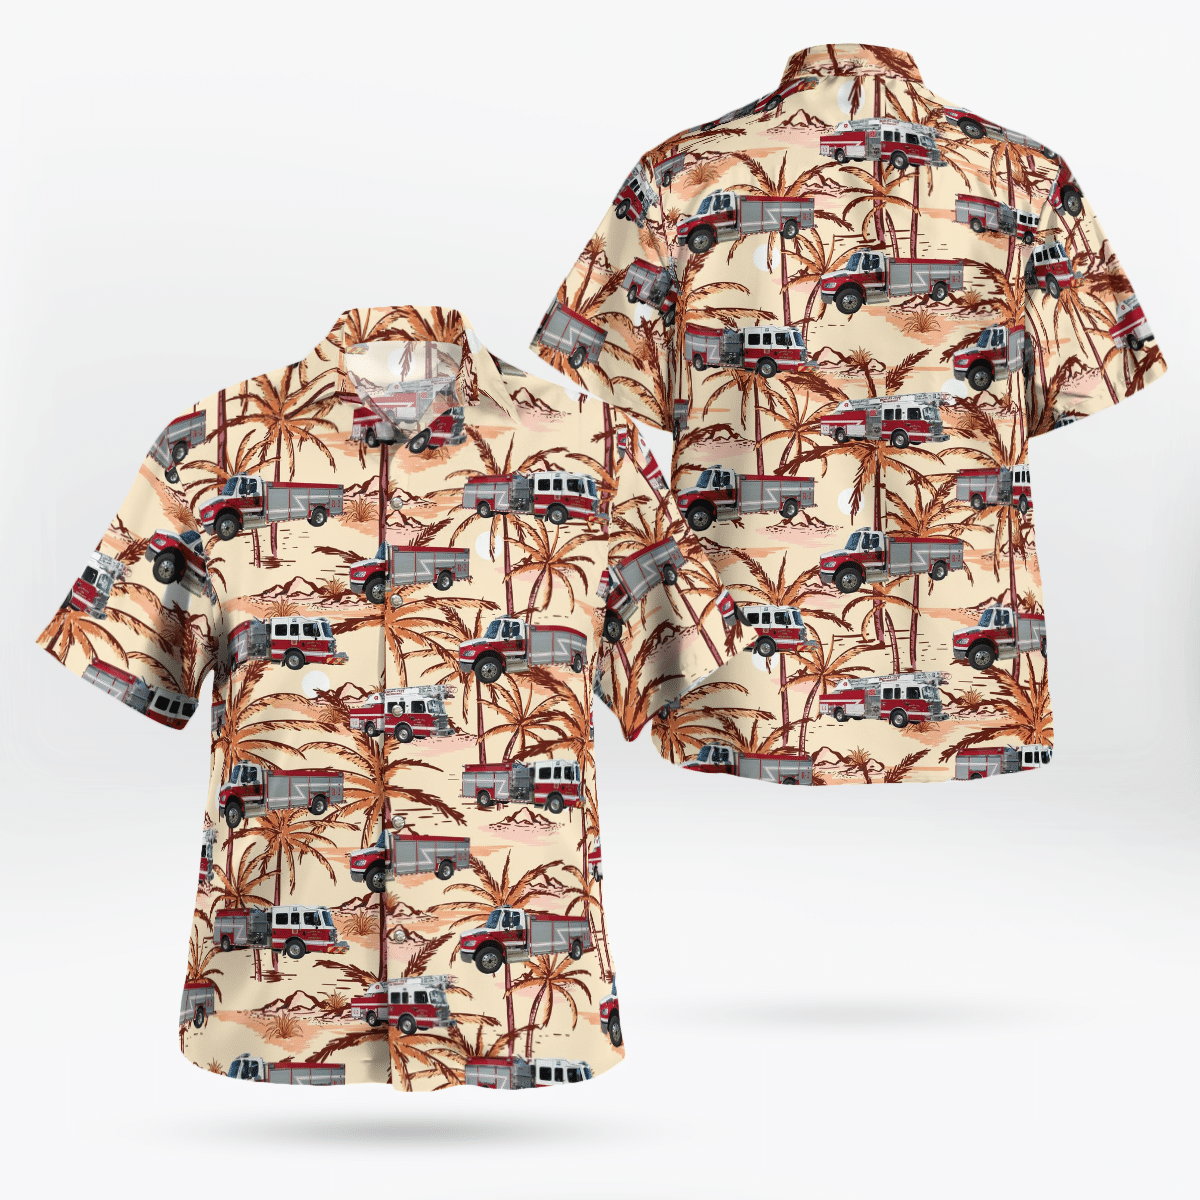 Why don't you order Hot Hawaiian Shirt today? 51